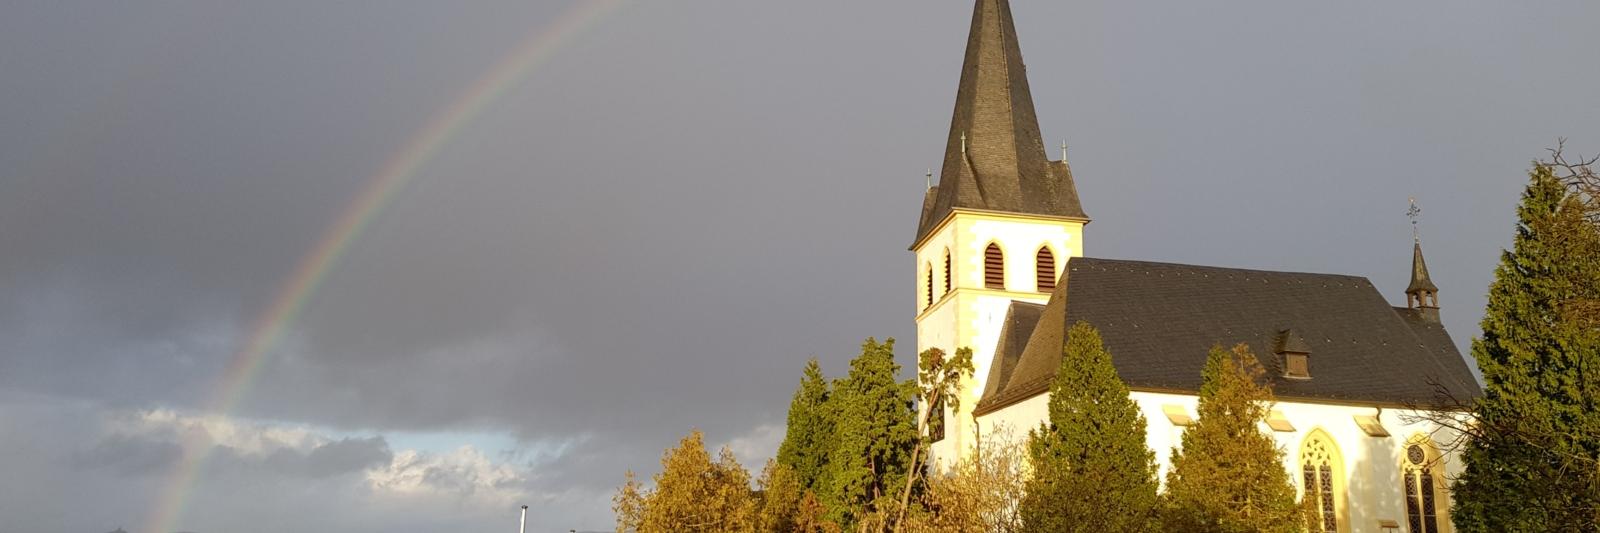 Pfarrkirche St. Pantaleon in Unkel